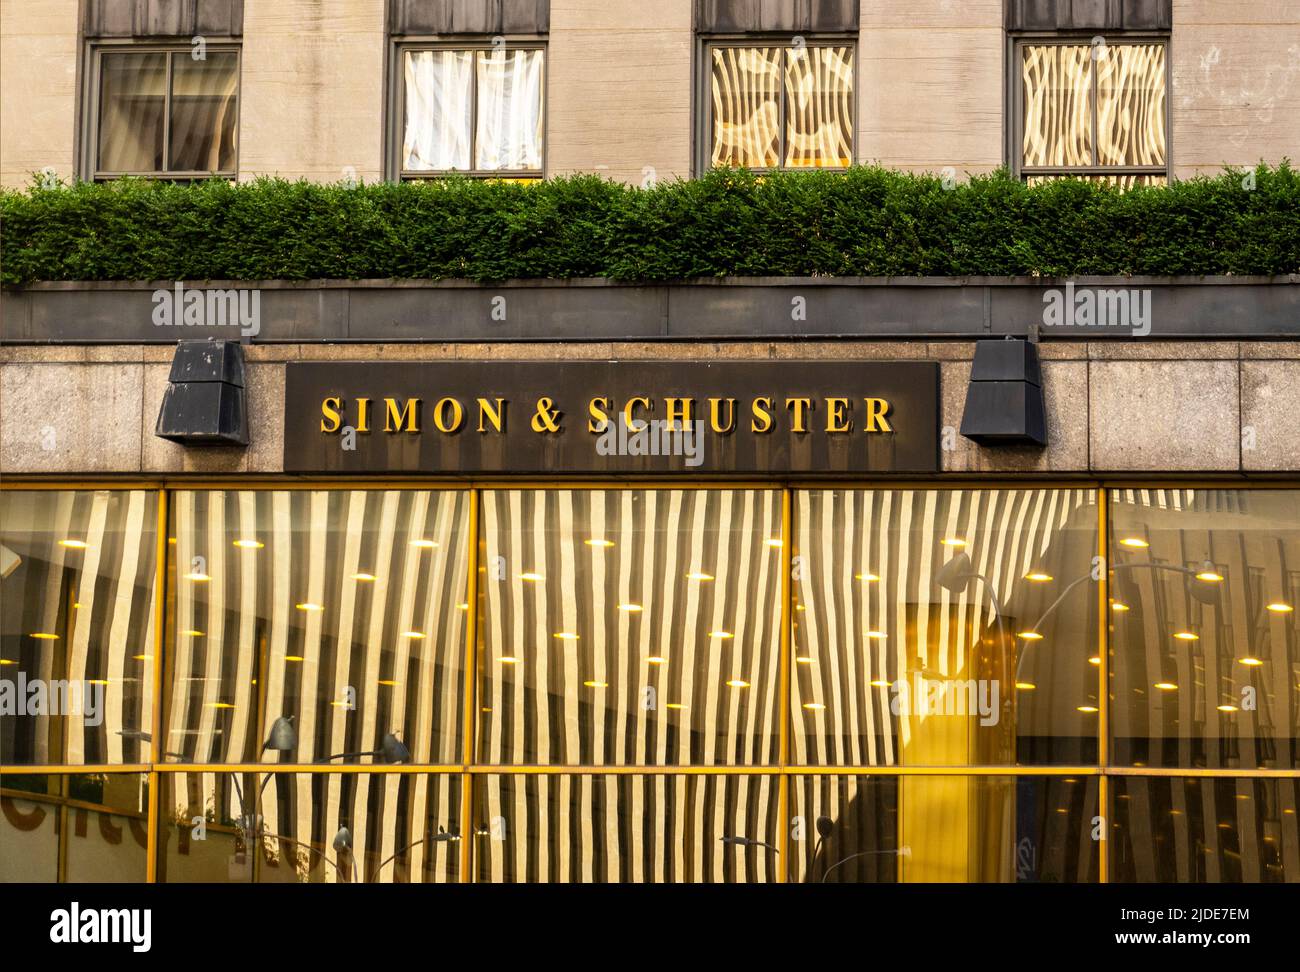 Simon & Schuster book publisher in Rockefeller Center Manhattan NYC Stock Photo